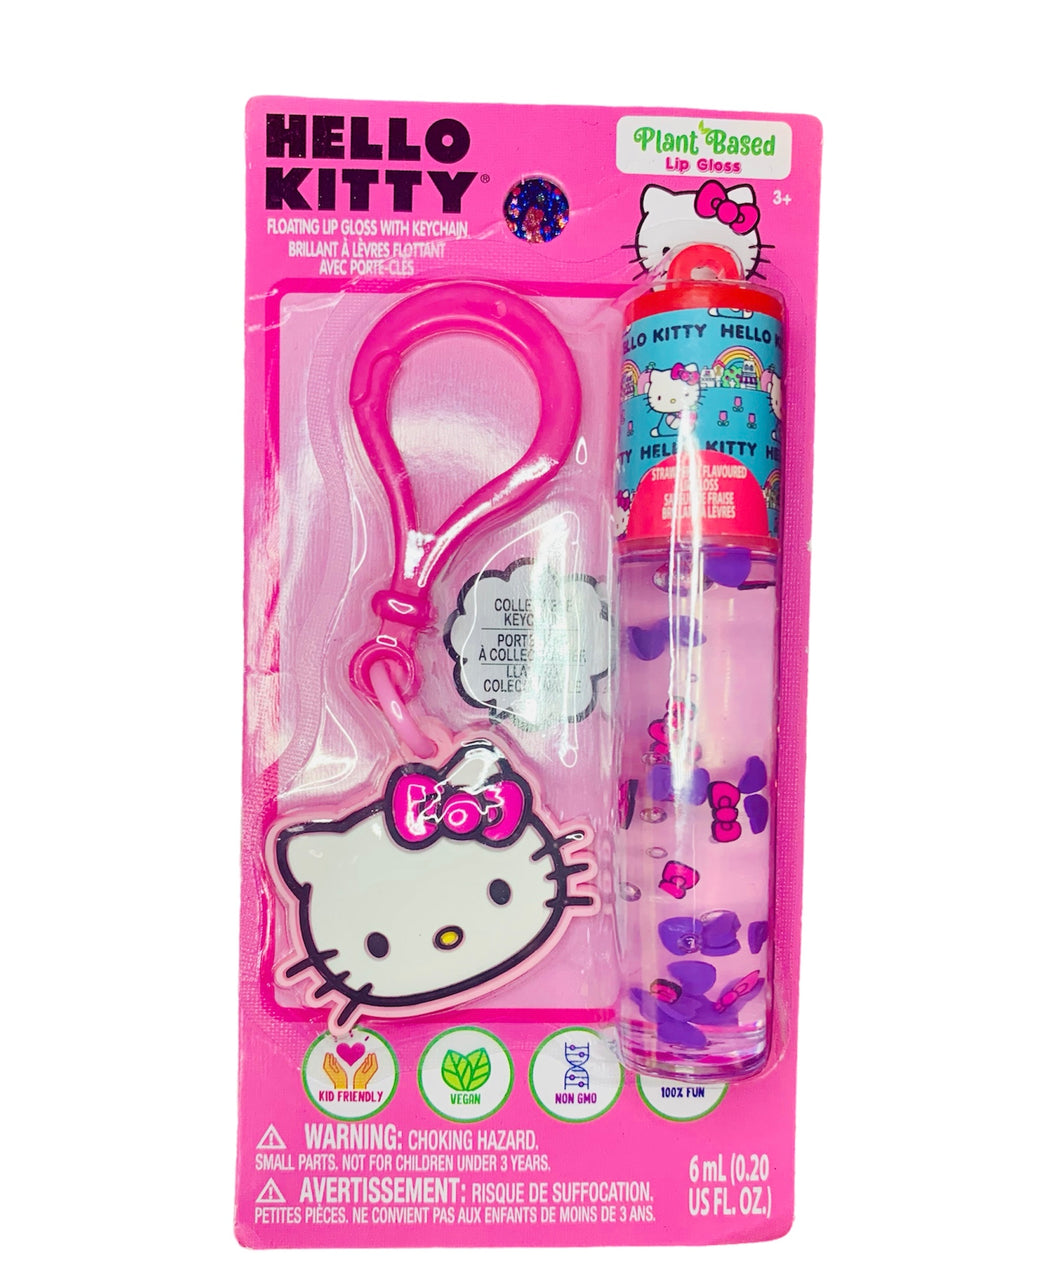 Little Kitty Vegan Lipgloss and Keychain Set